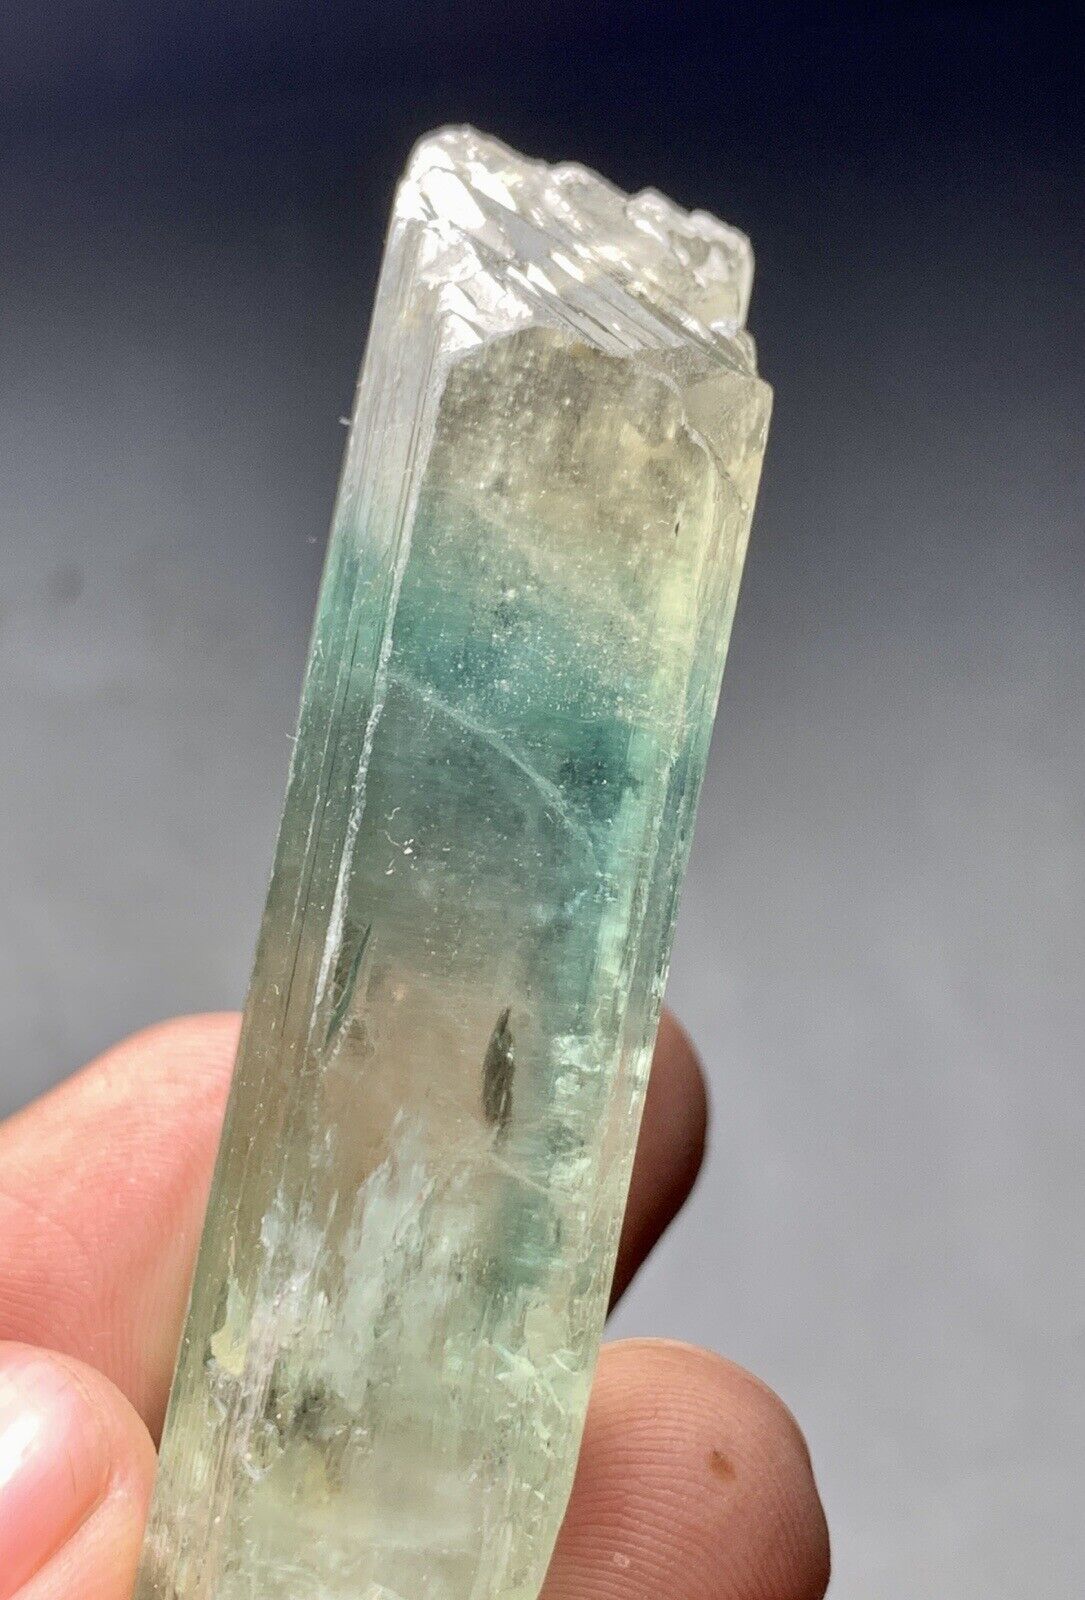 477 Carat  Kunzite Crystal From Afghanistan